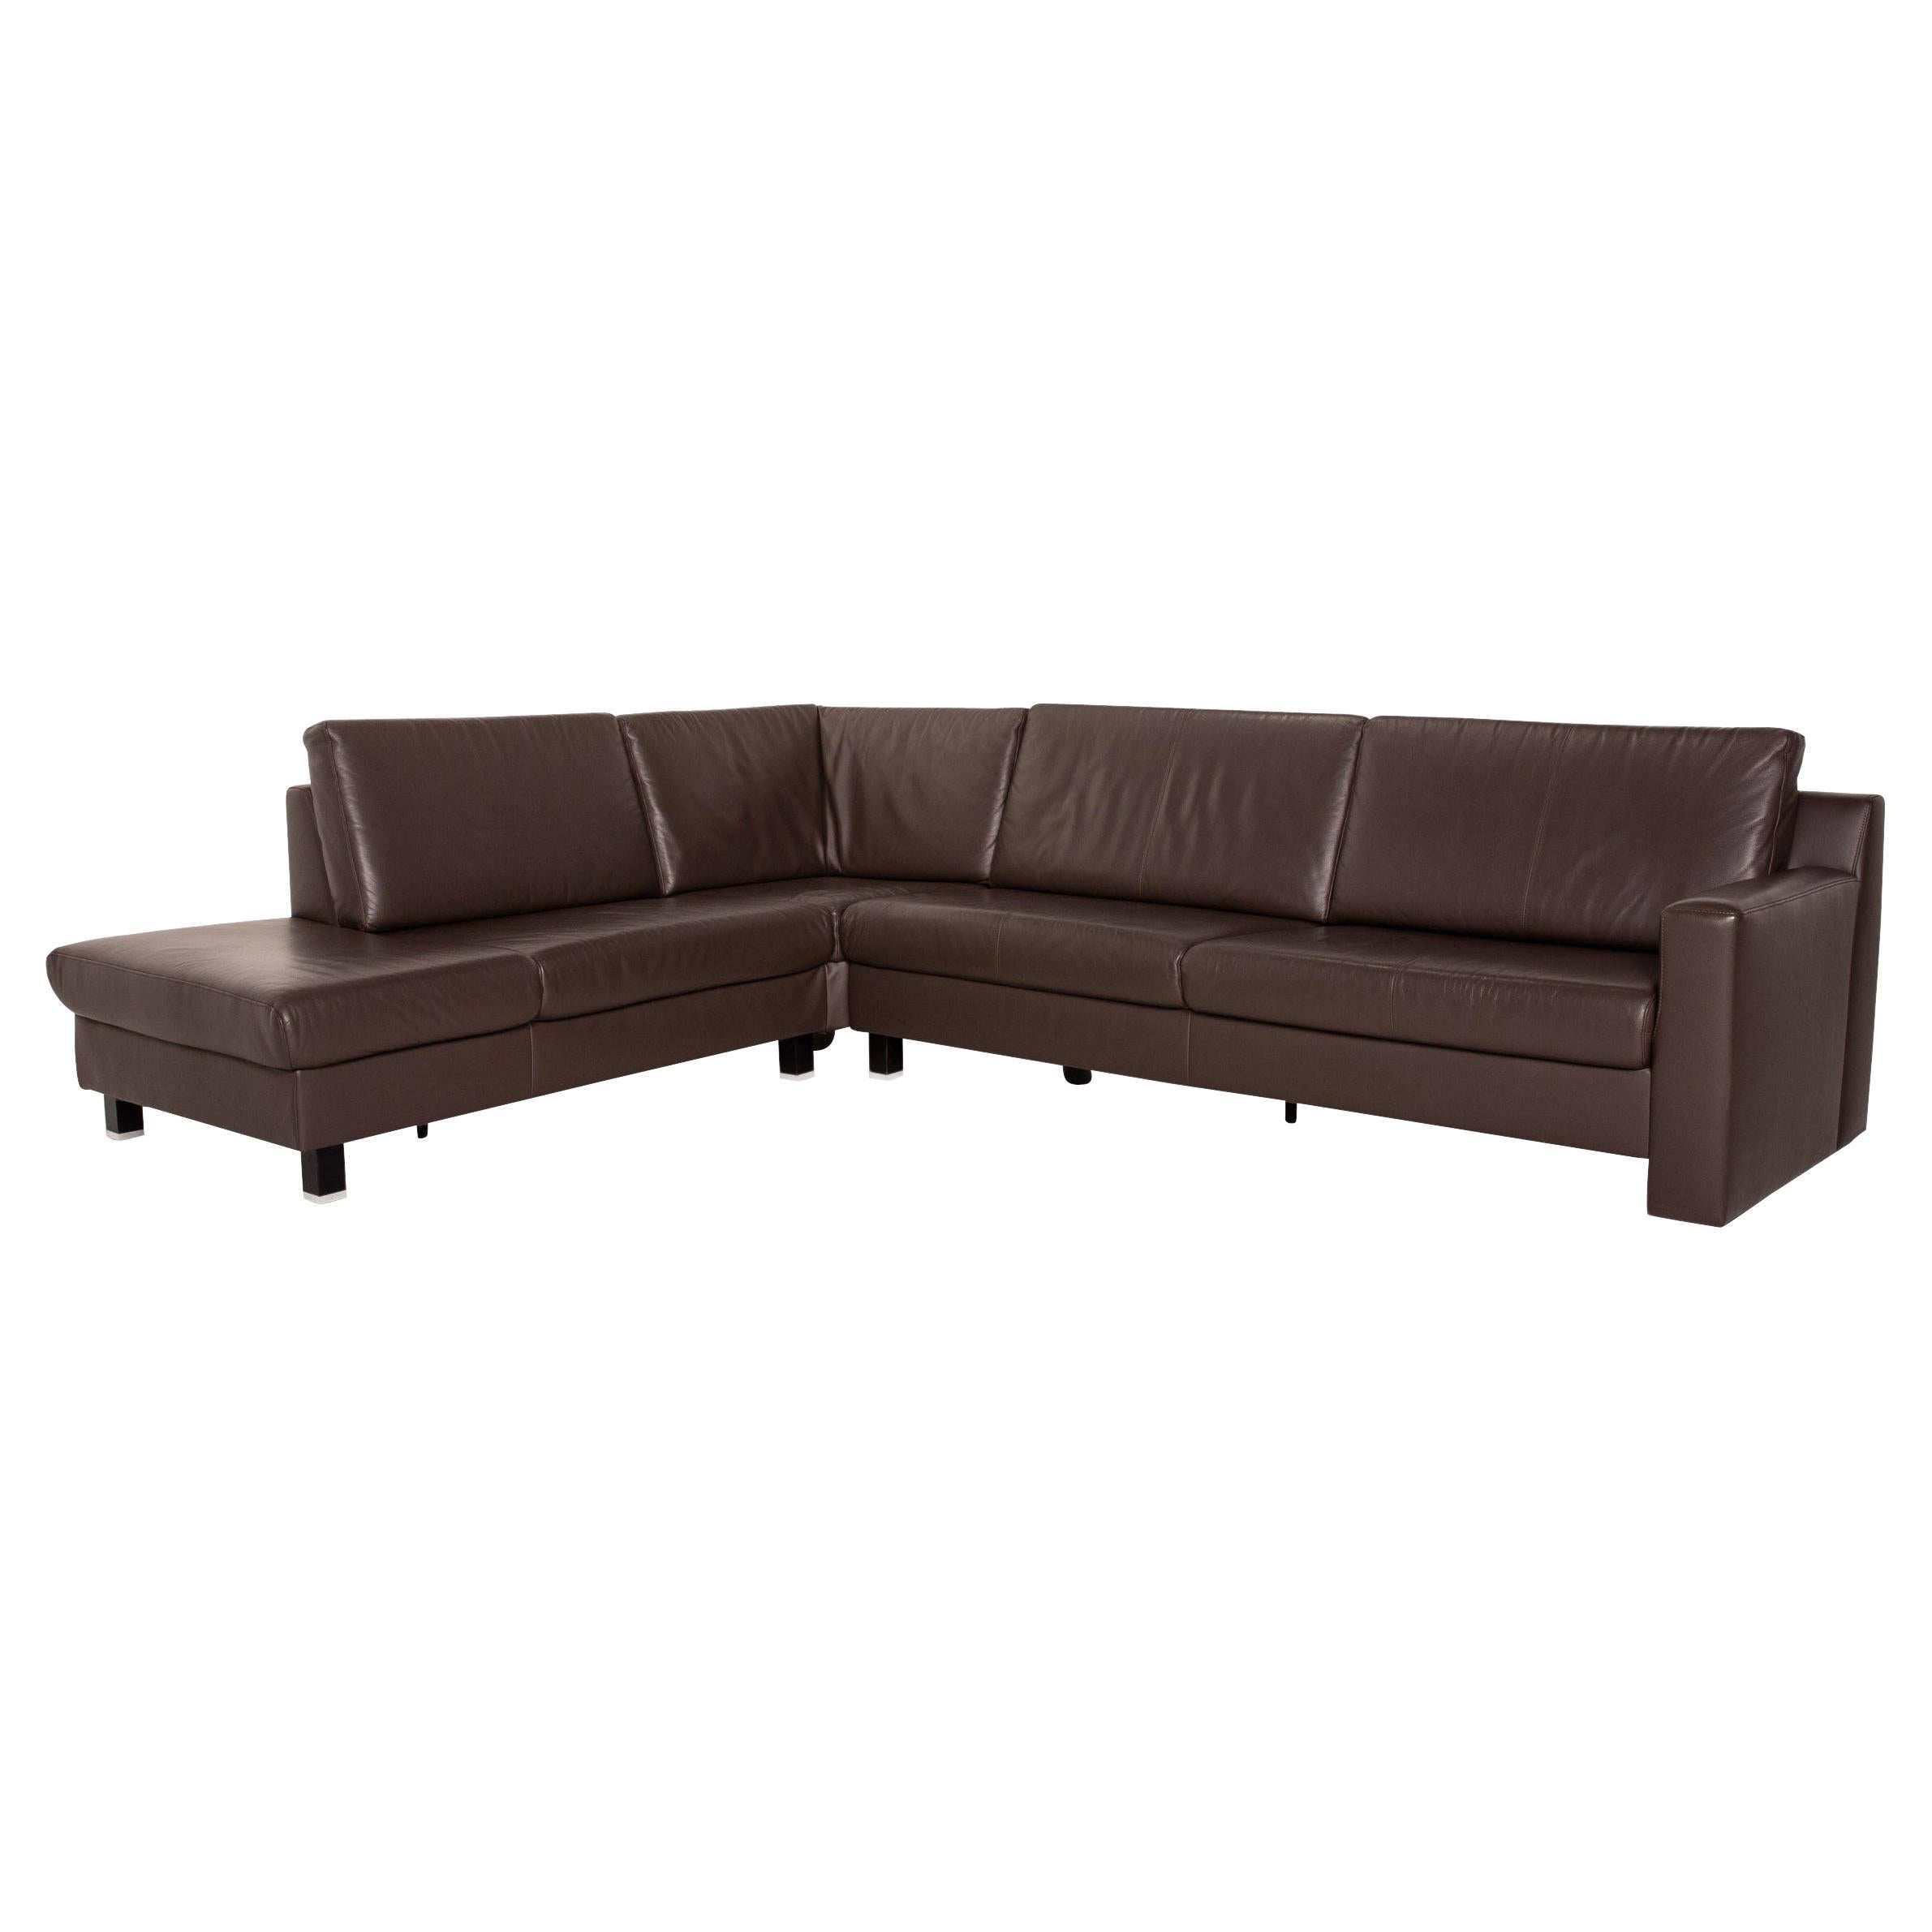 Ewald Schillig Flex Plus Leather Corner Sofa Brown Dark Brown Sofa Couch For Sale